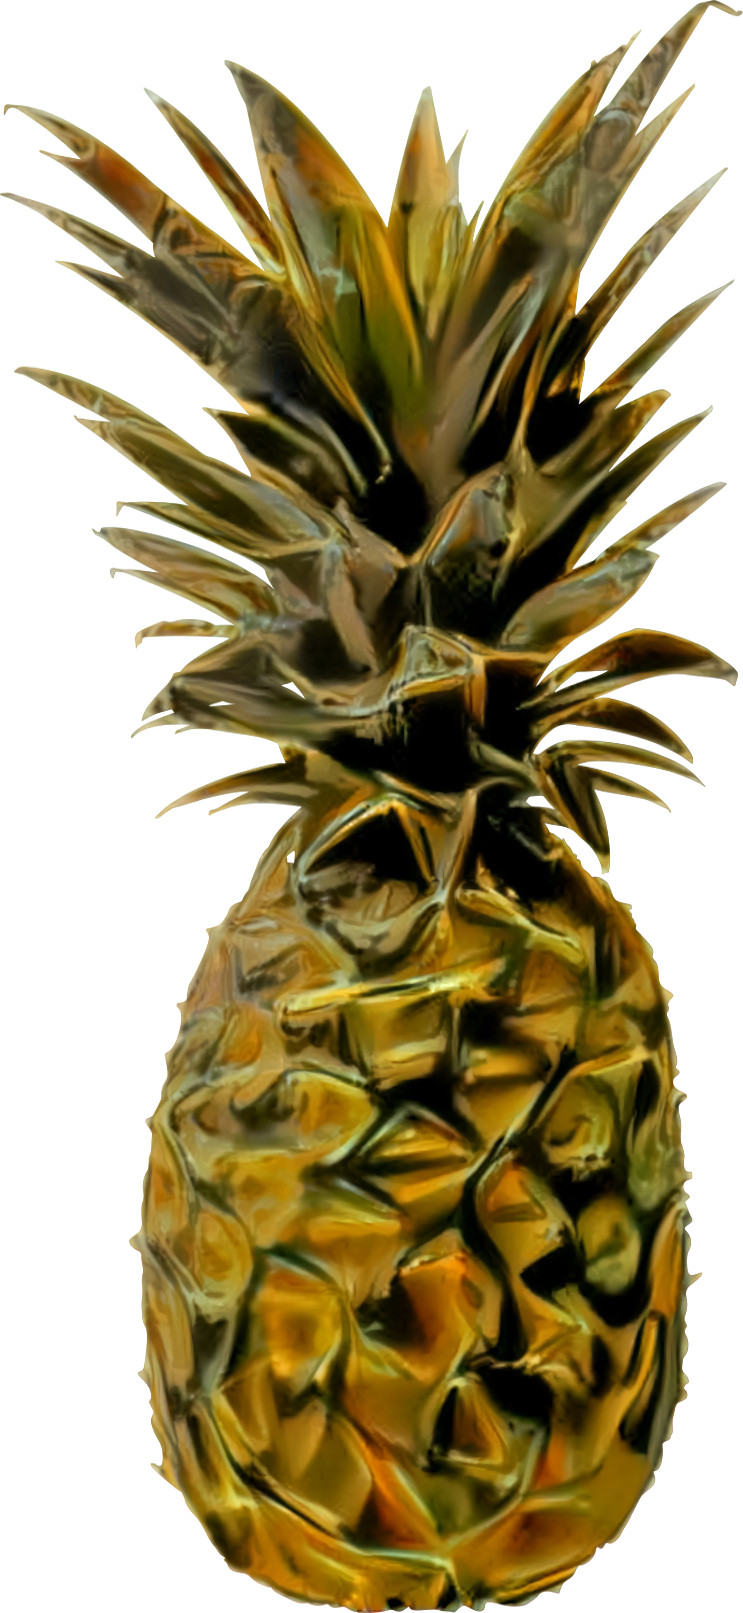 Gold Pineapple 